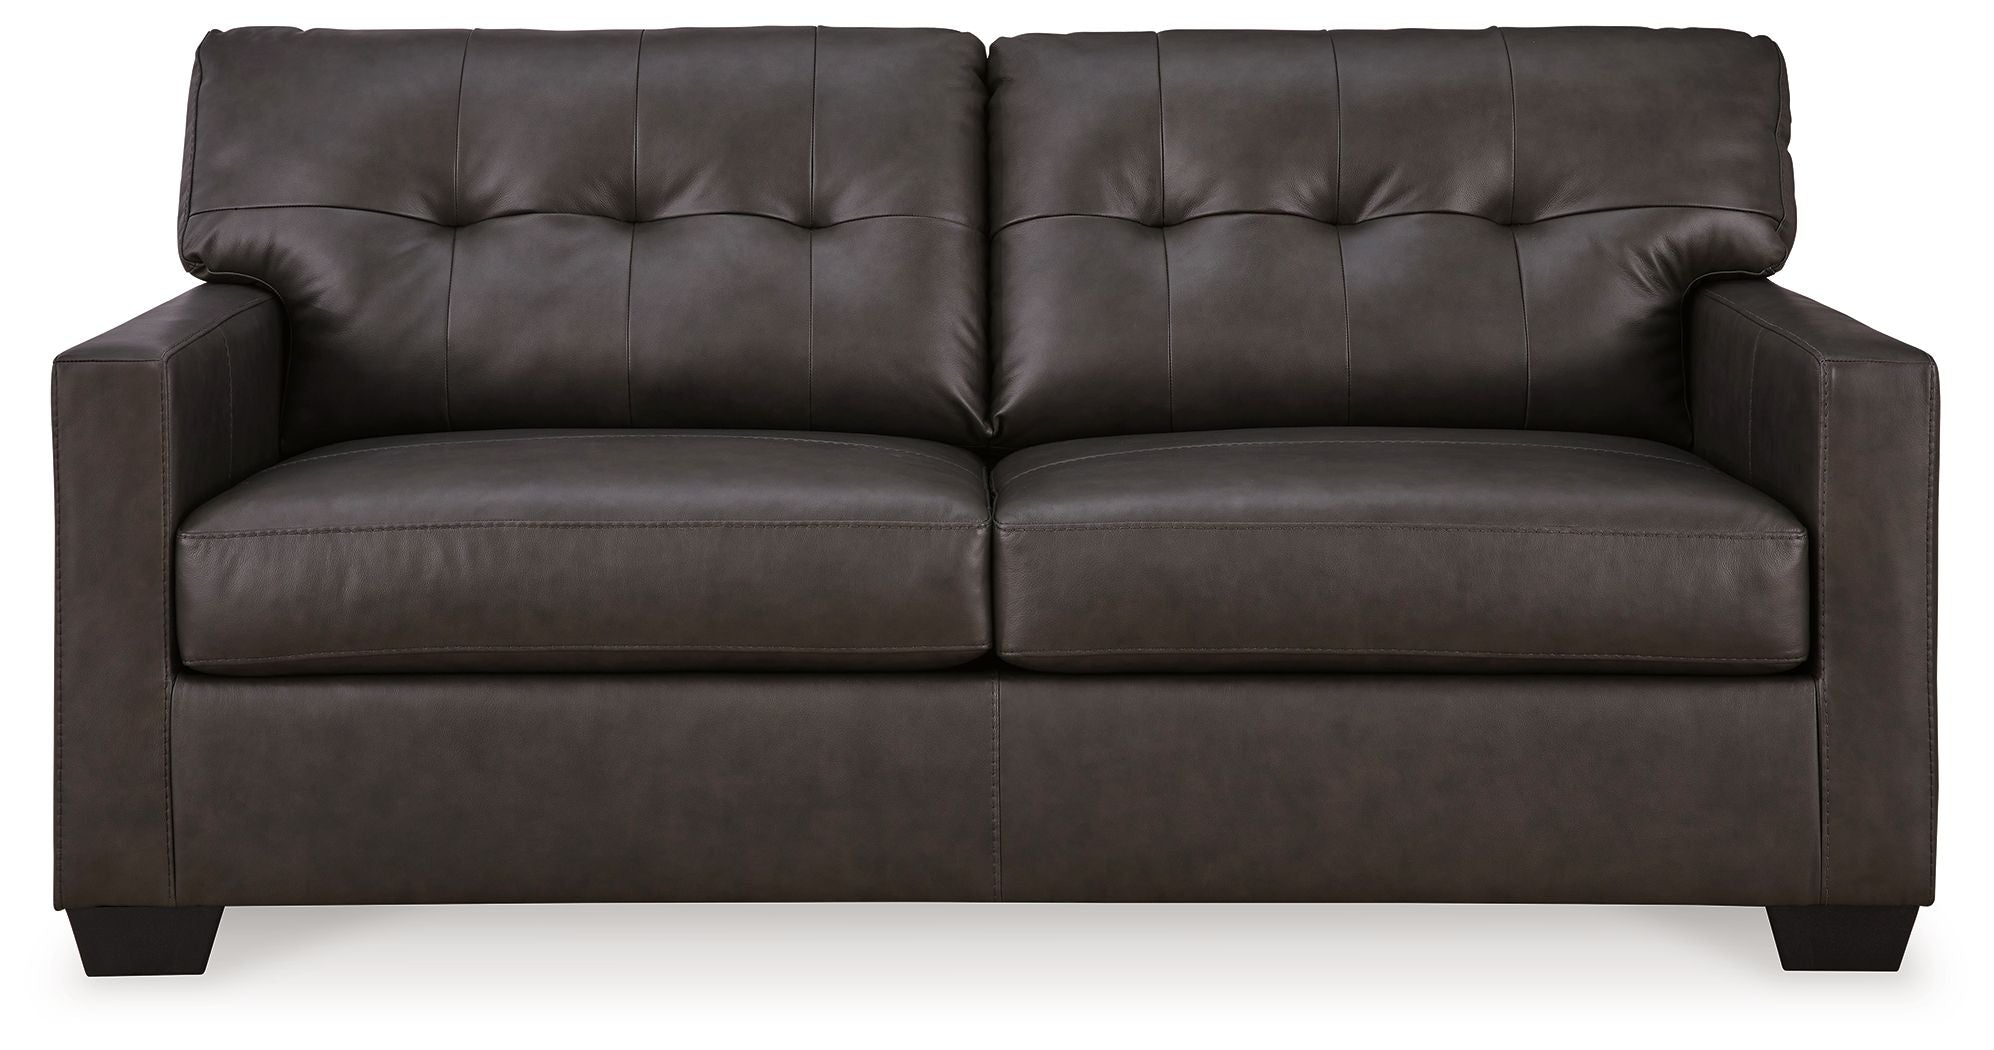 Belziani - Storm - Sofa - Leather Match